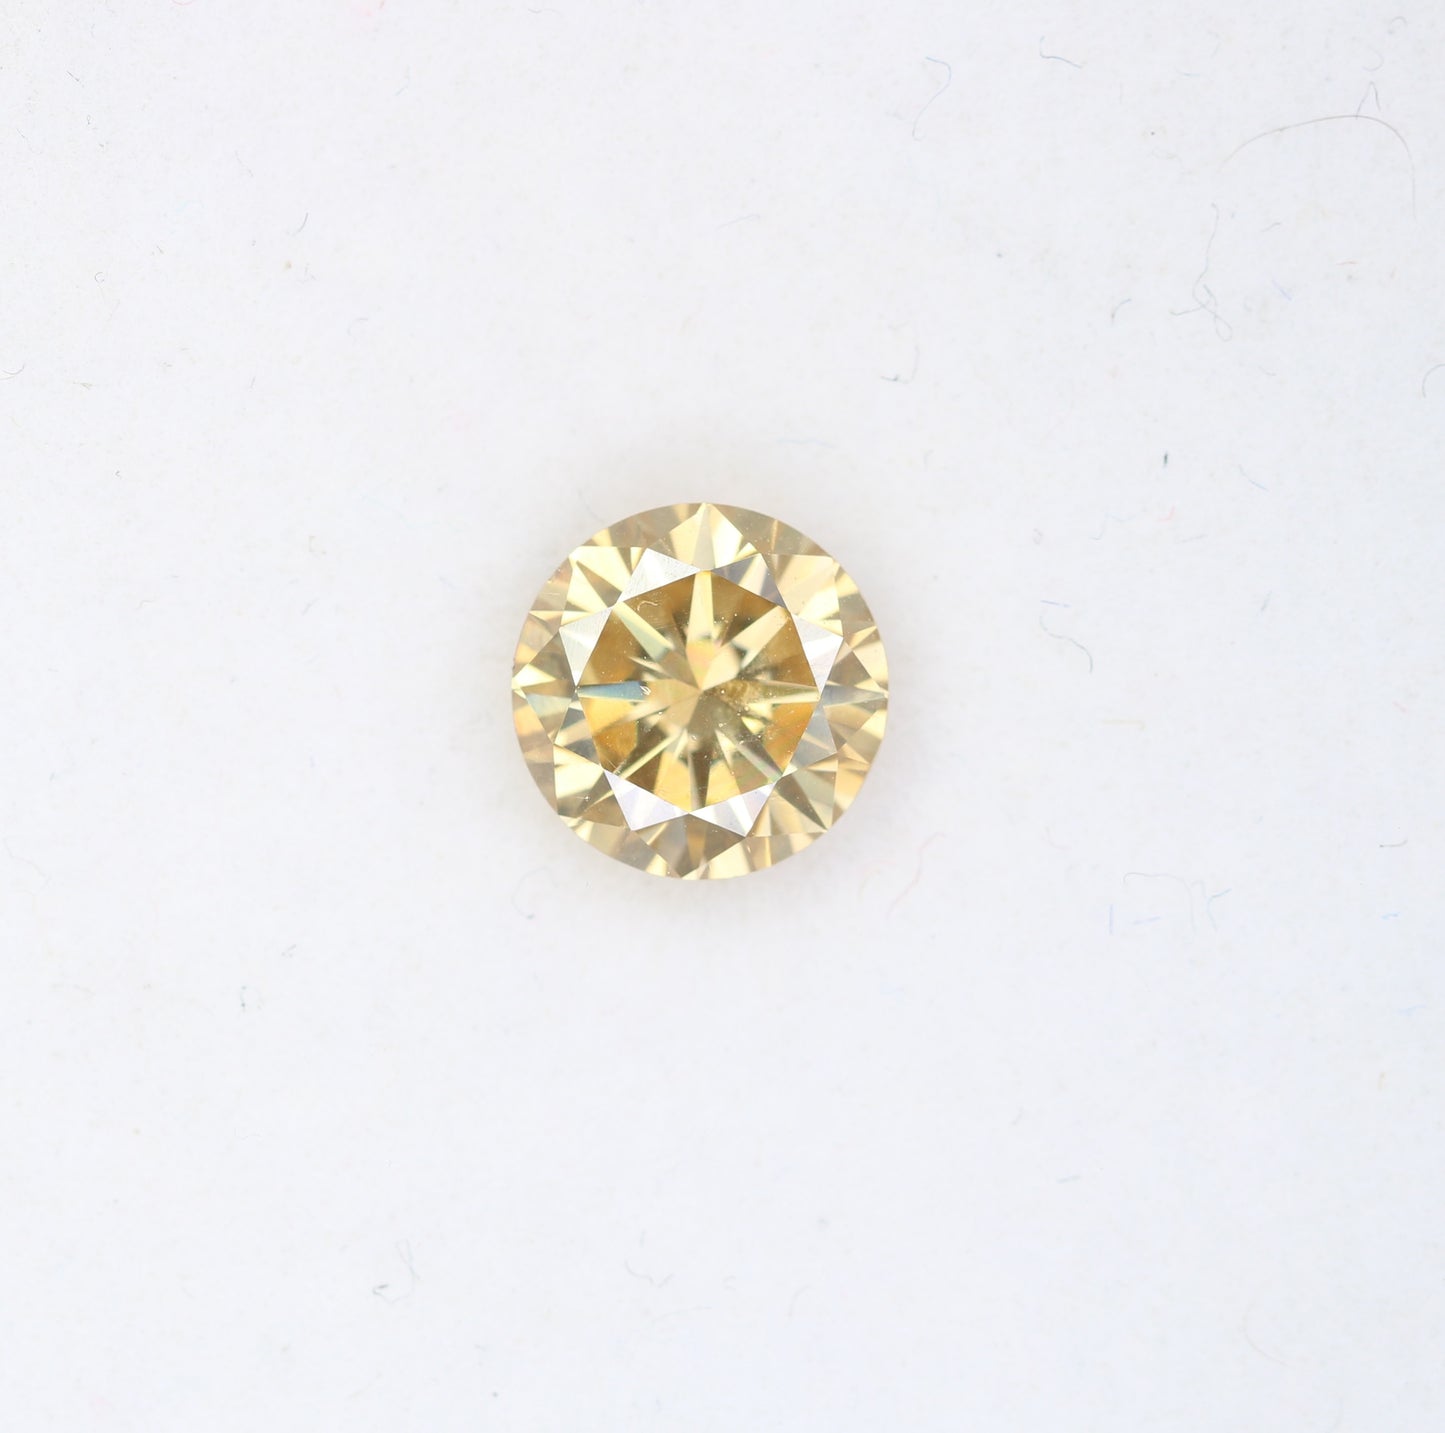 1.23 CT Round Brilliant Cut Orange Moissanite Diamond For Engagement Ring